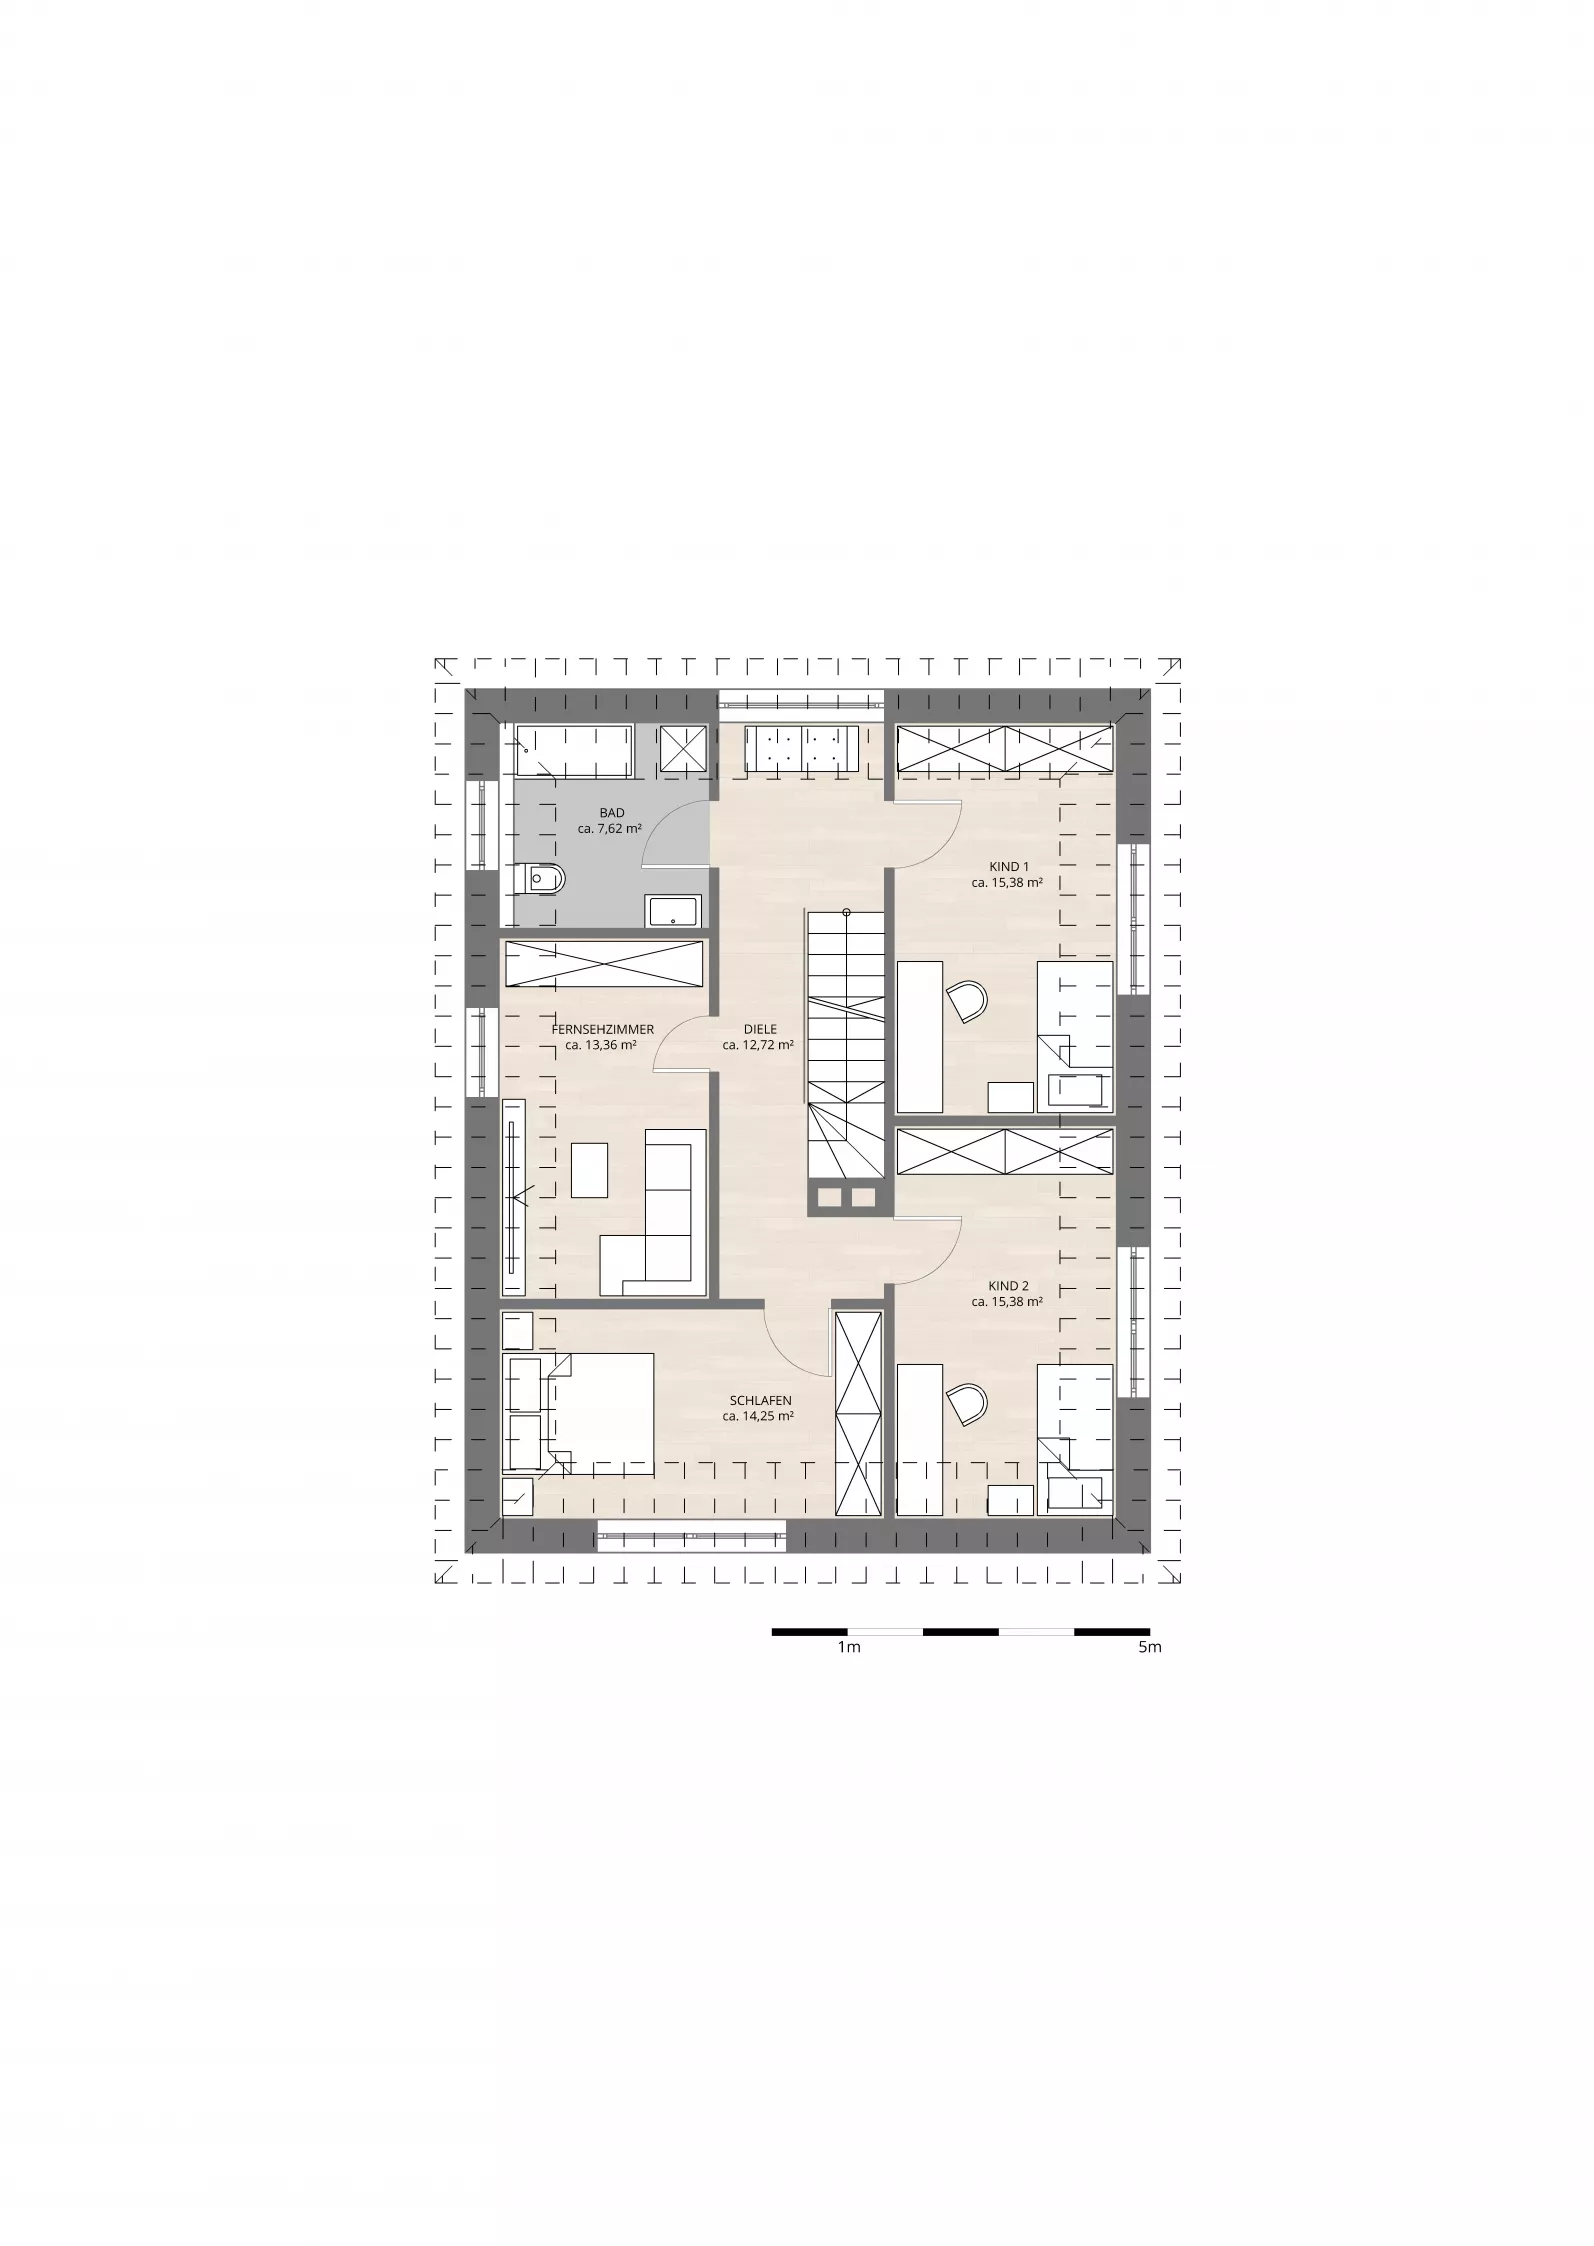 Einfamilienhaus GB02, Obergeschoss